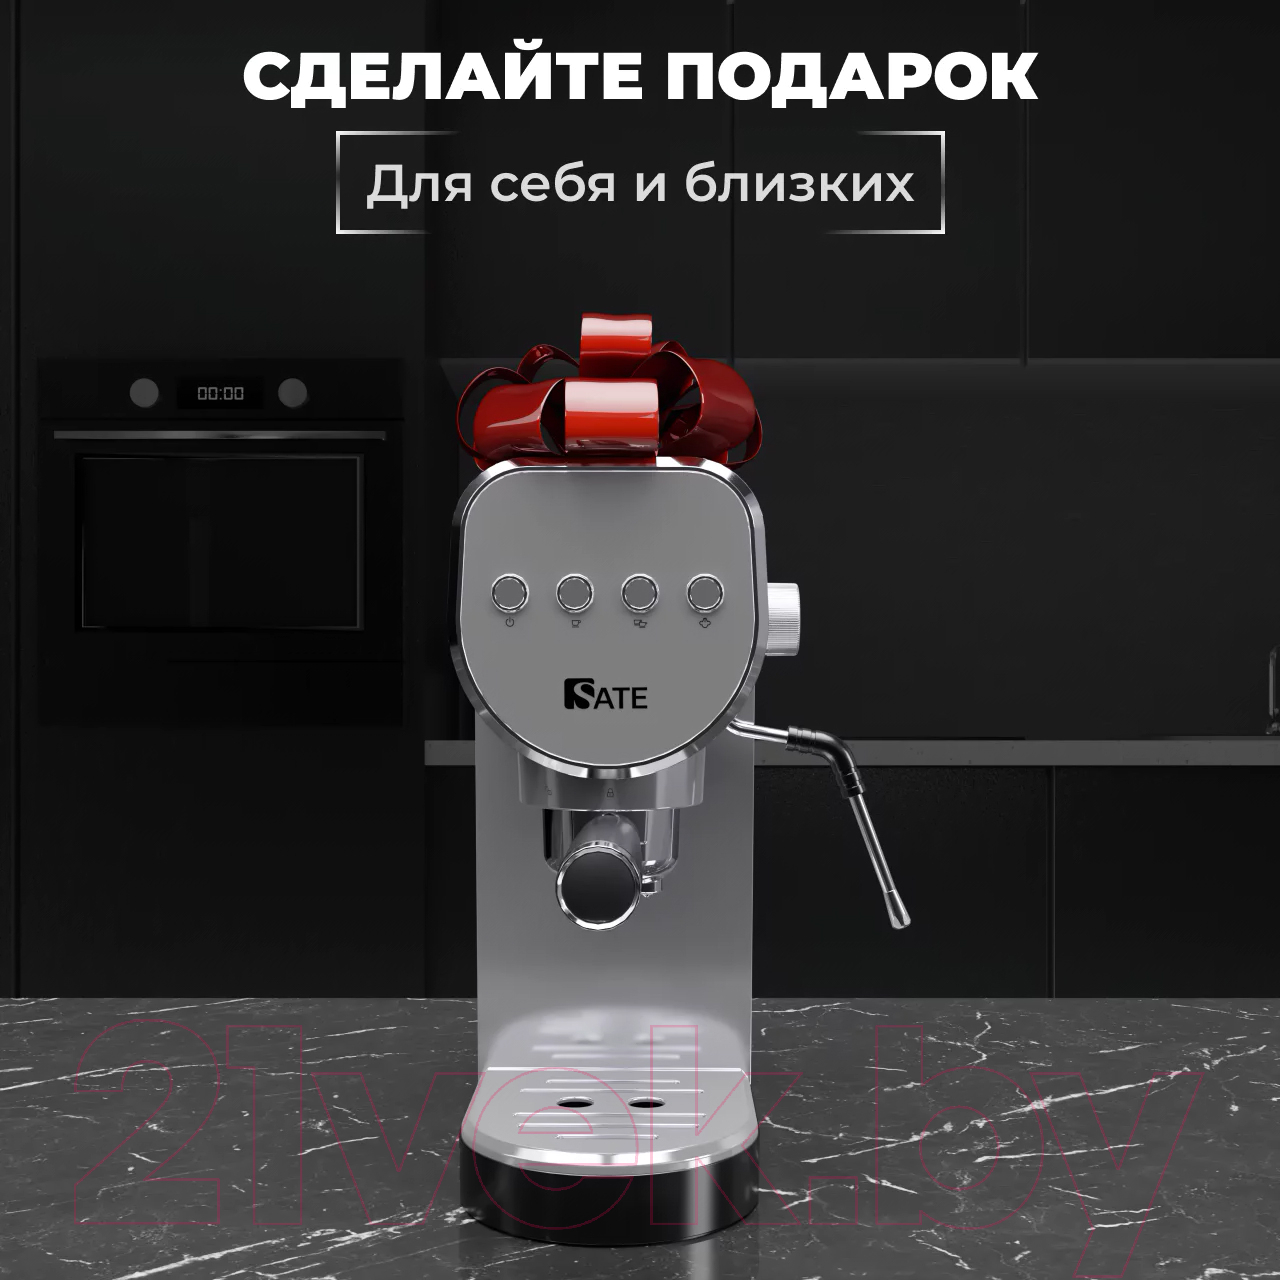 Кофеварка эспрессо Sate GT-50